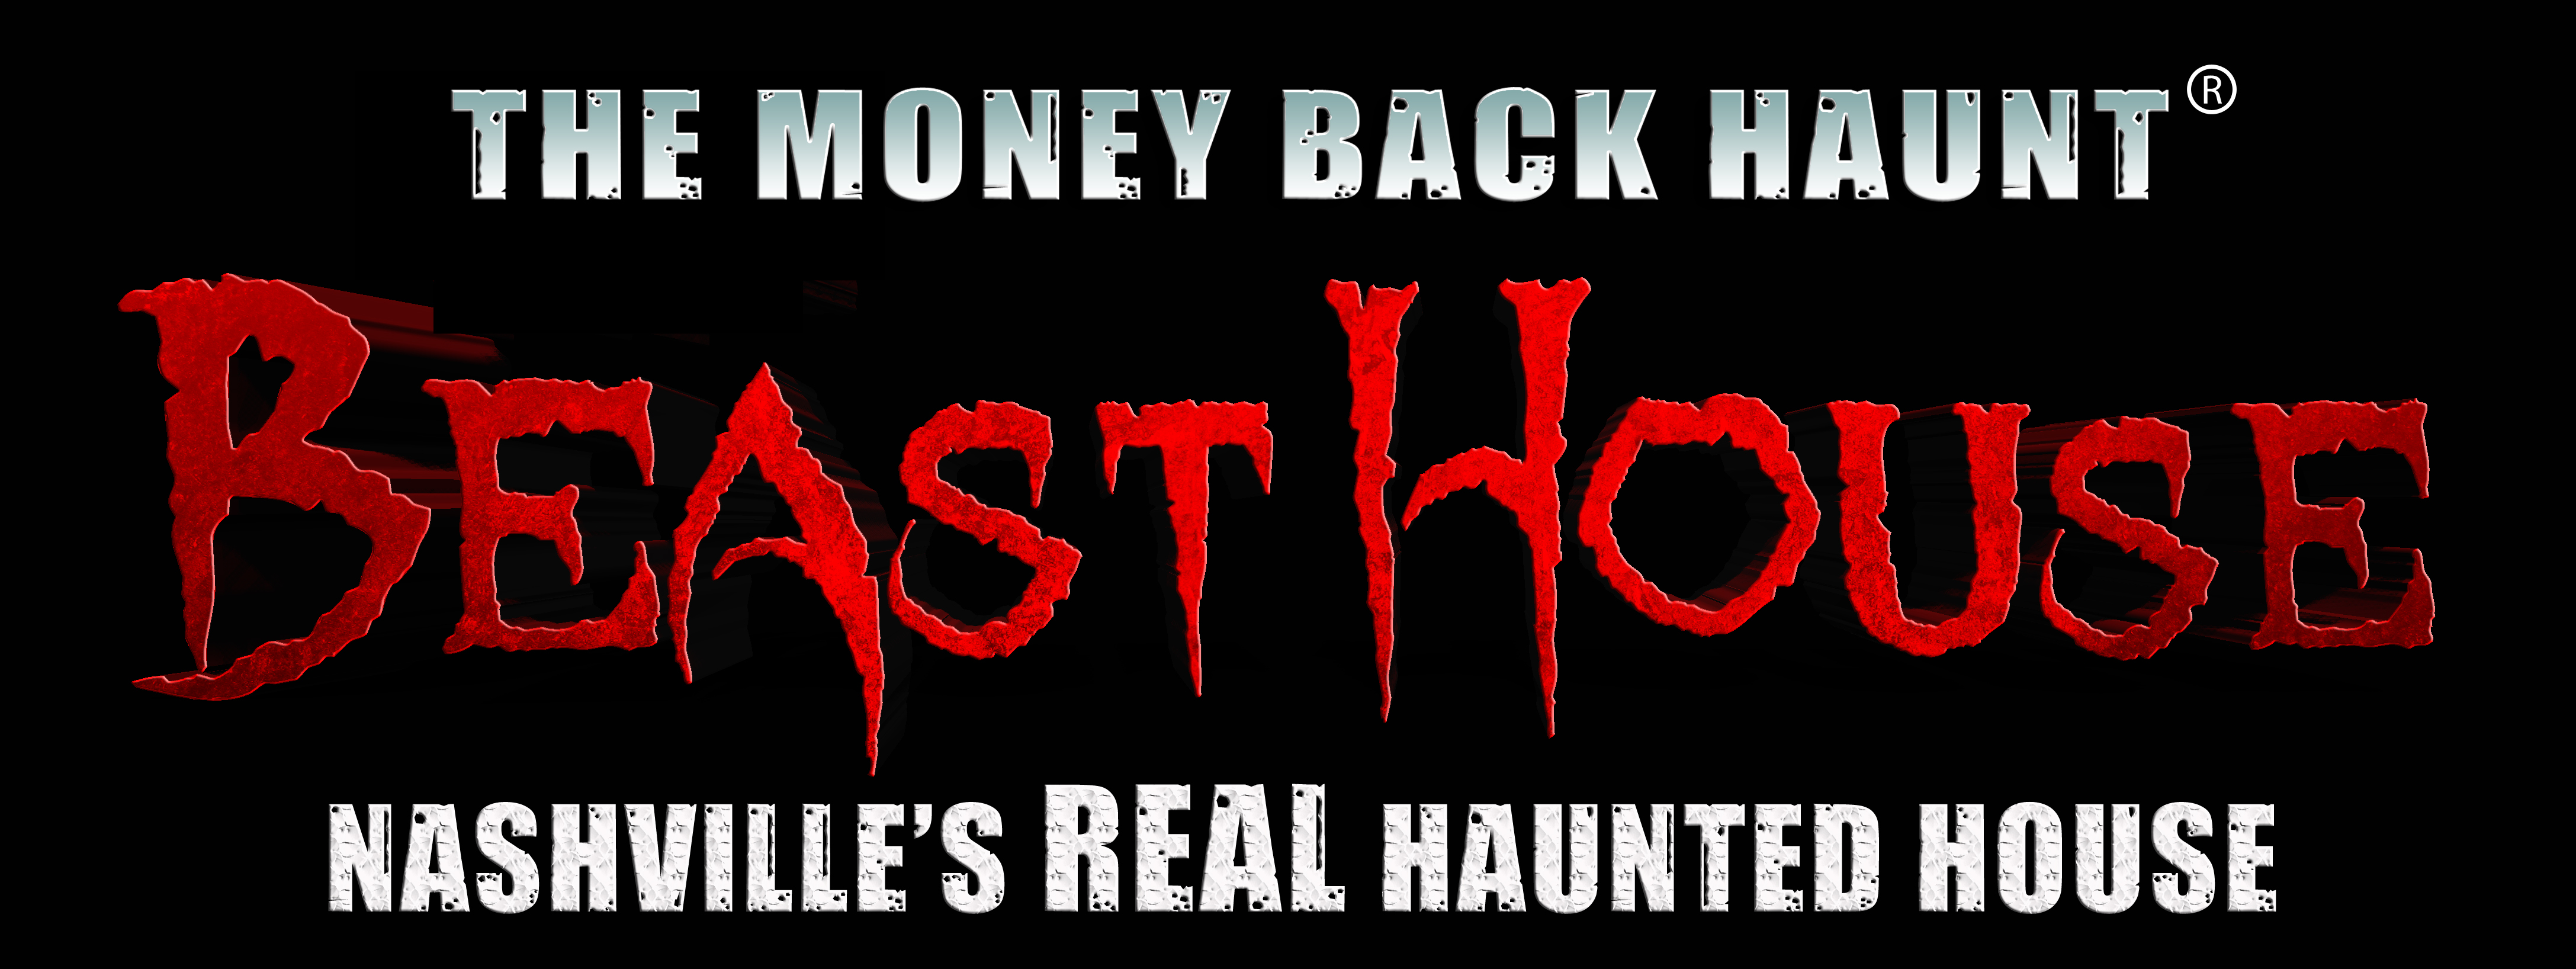 Beast House The Money Back Haunted House Nashville Tn